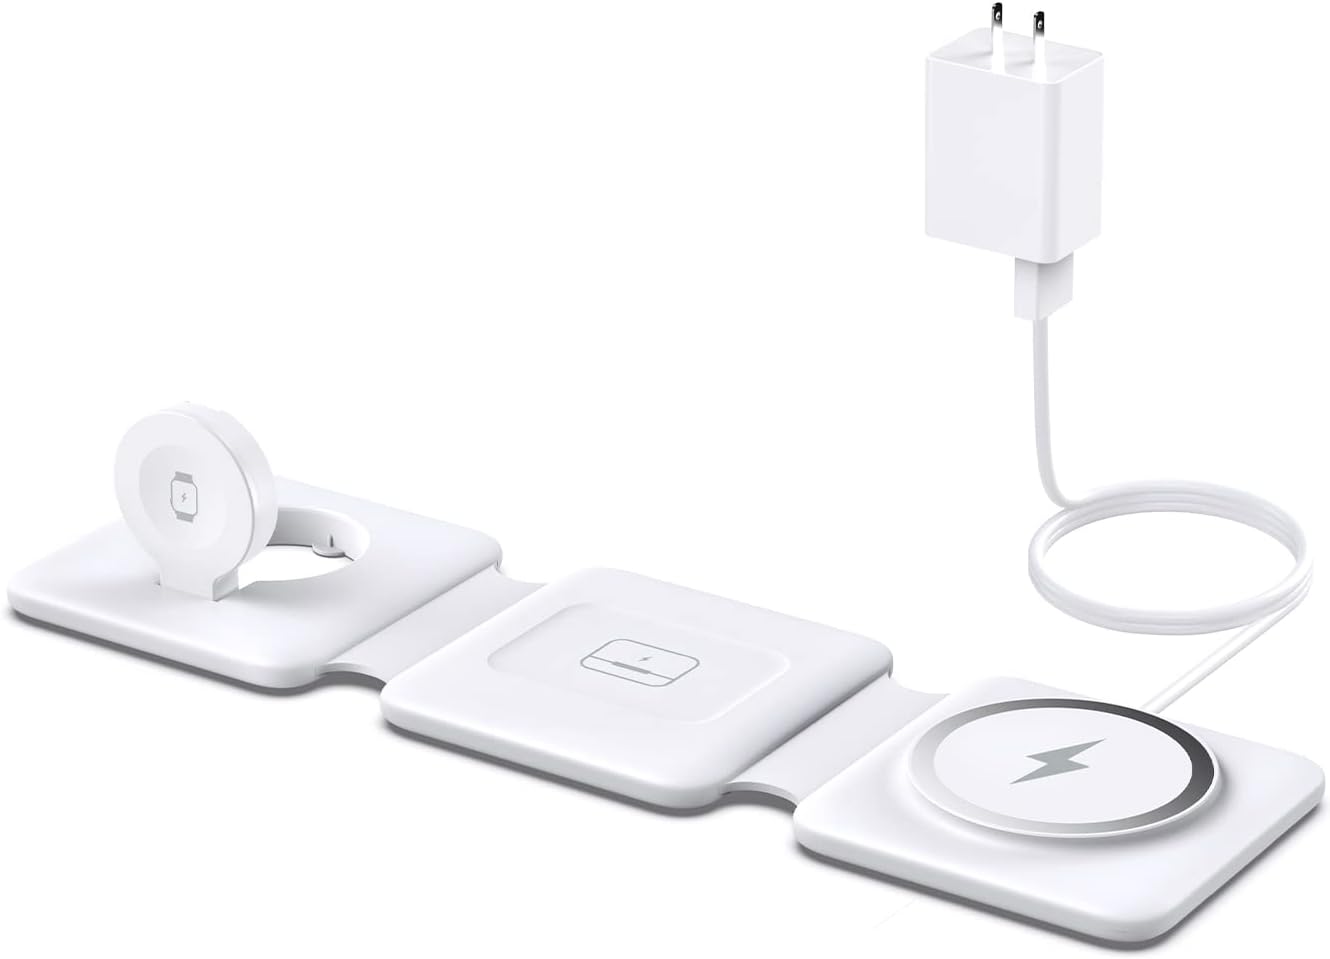 iMagPower - Carga tus dispositivos sin cables